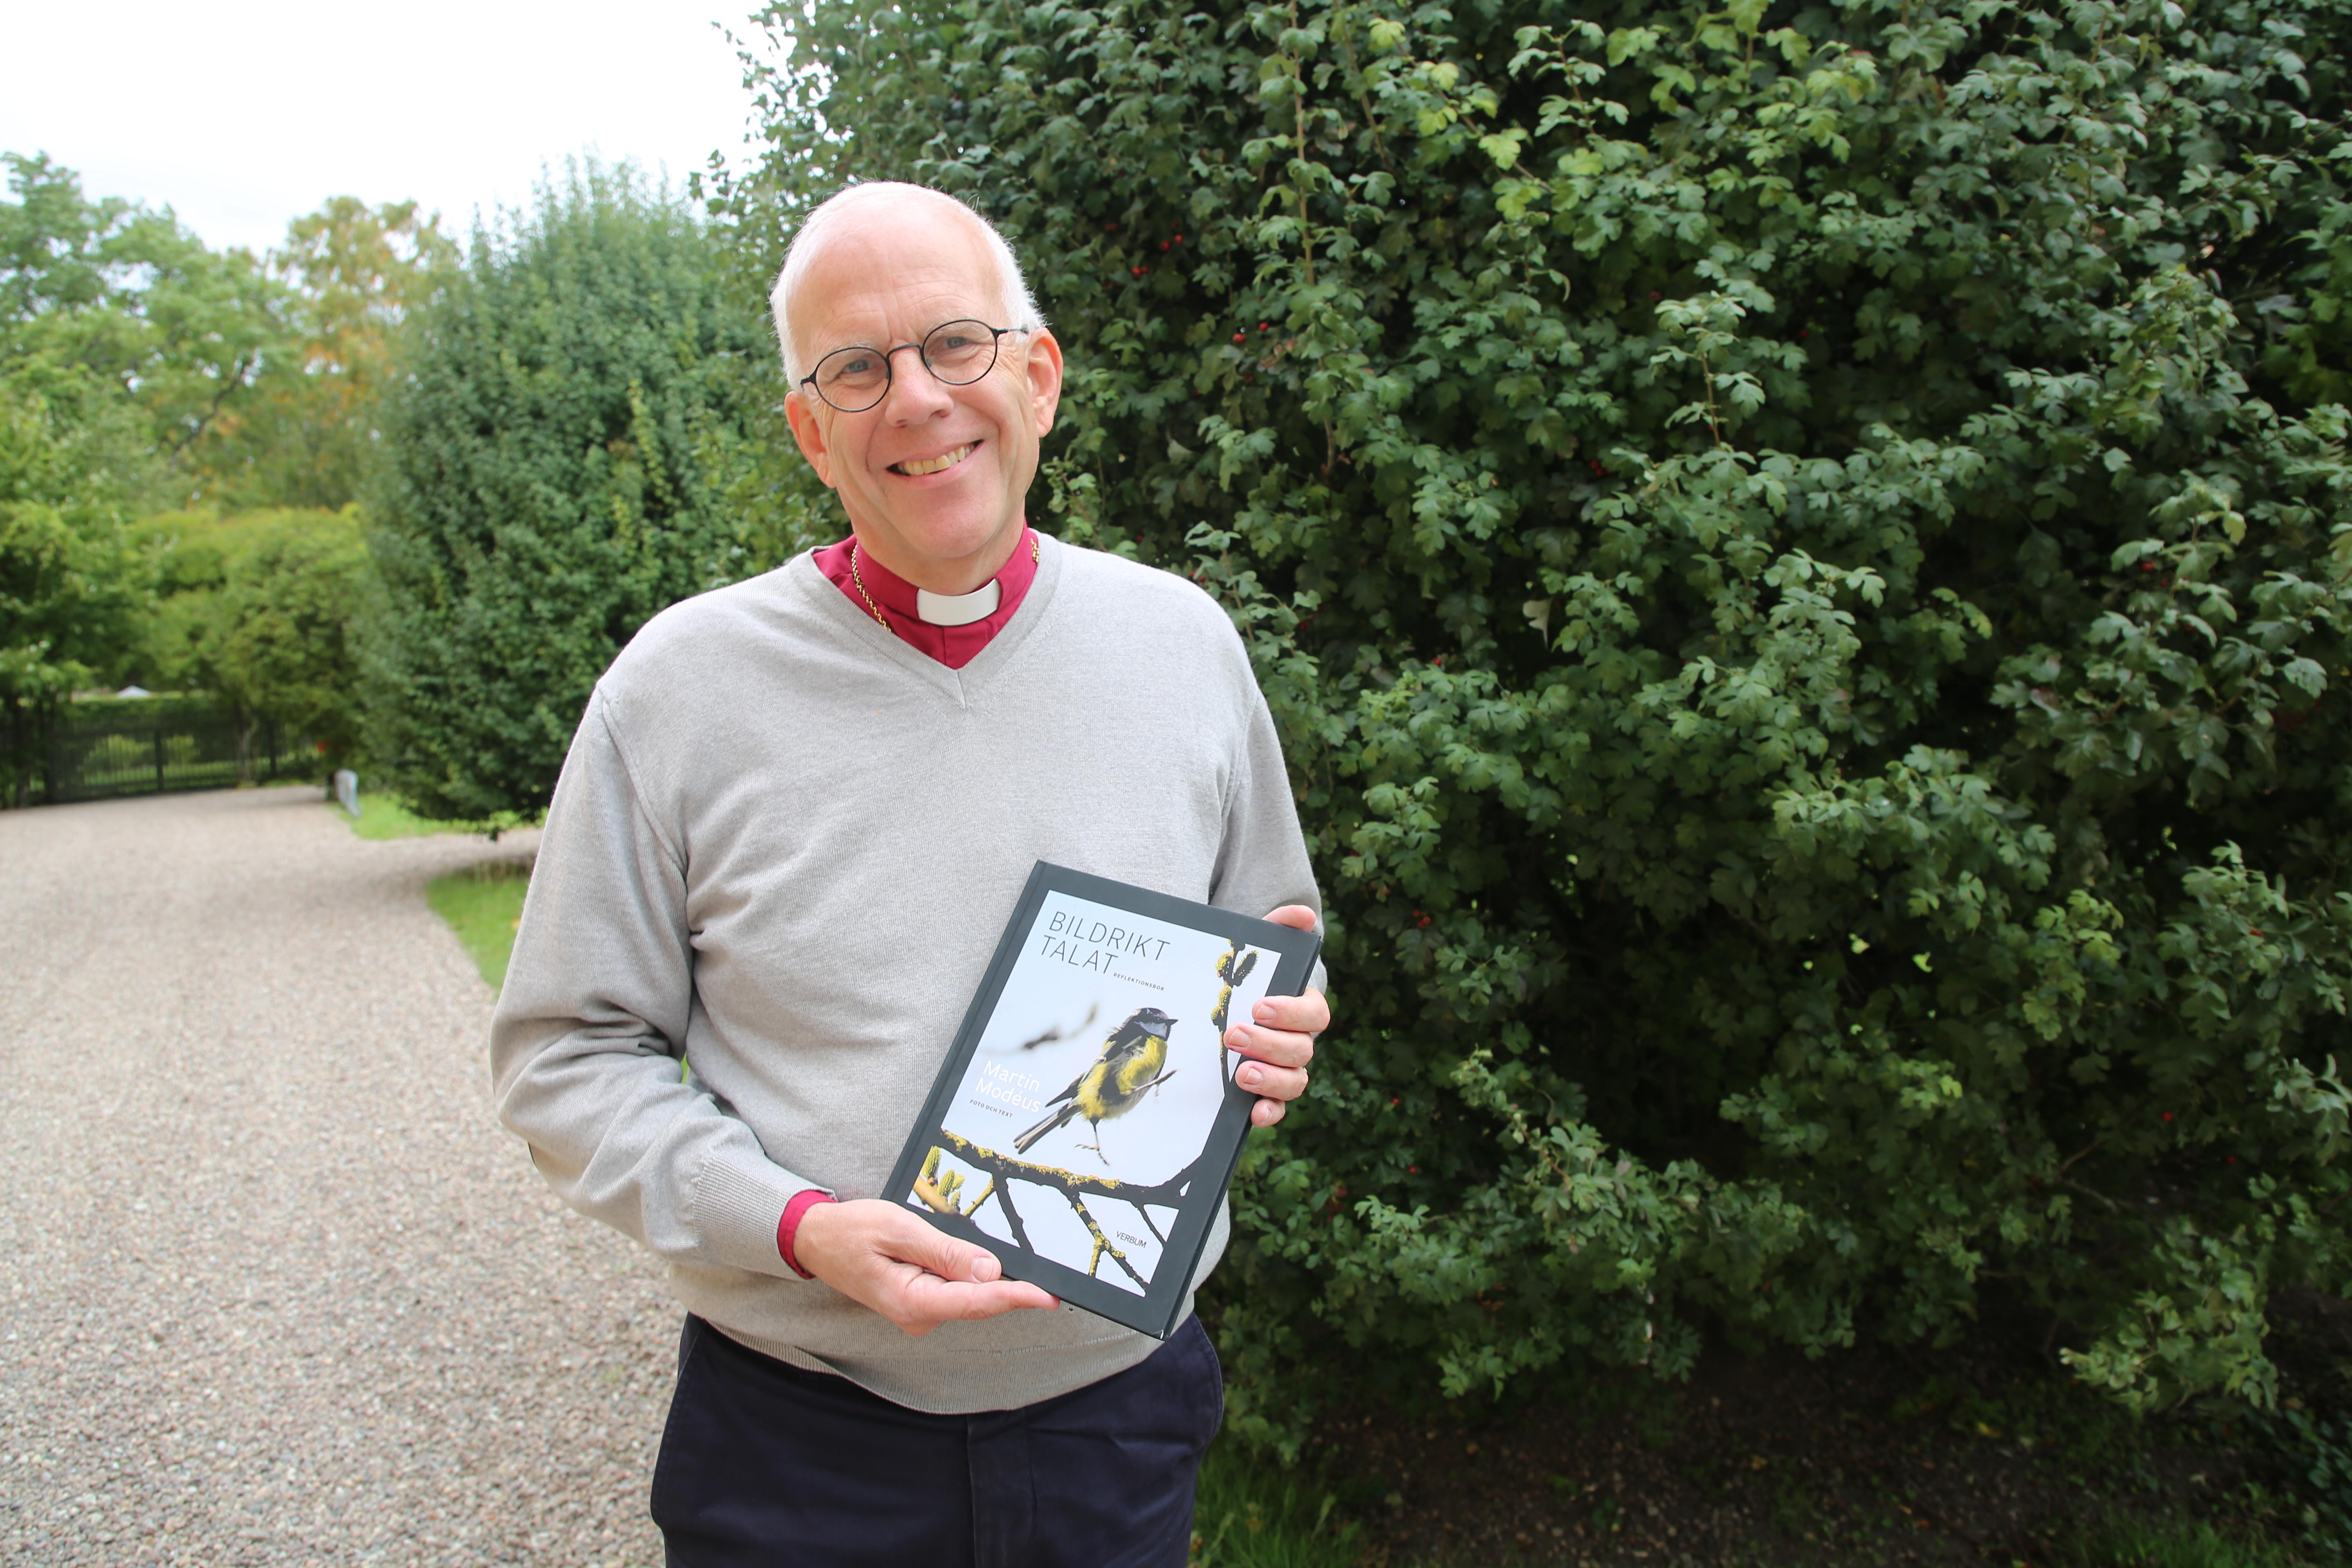 Biskop Martin Modéus håller sin bok "Bildrikt talat".